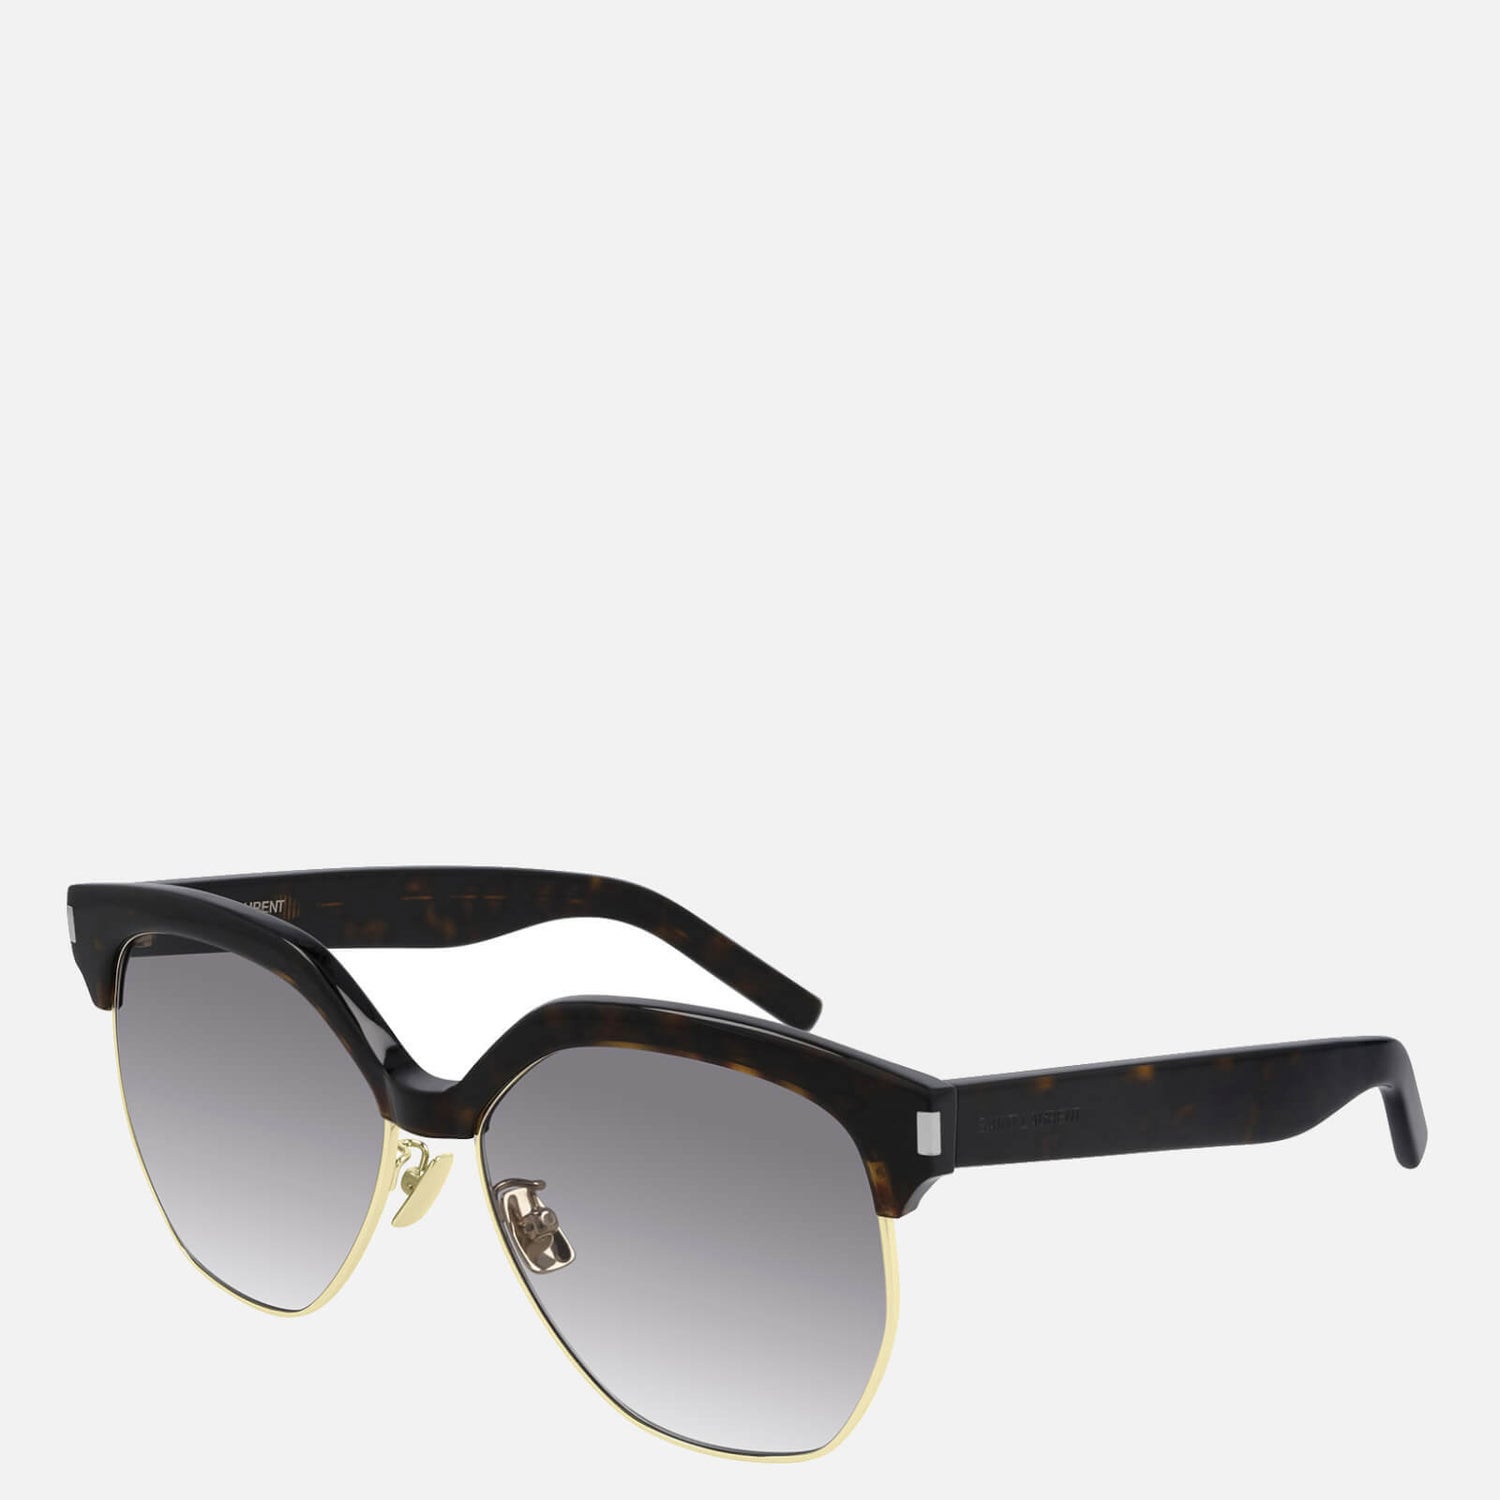 Saint Laurent Women's Half Acetate Frame Sunglasses - Havana/Grey